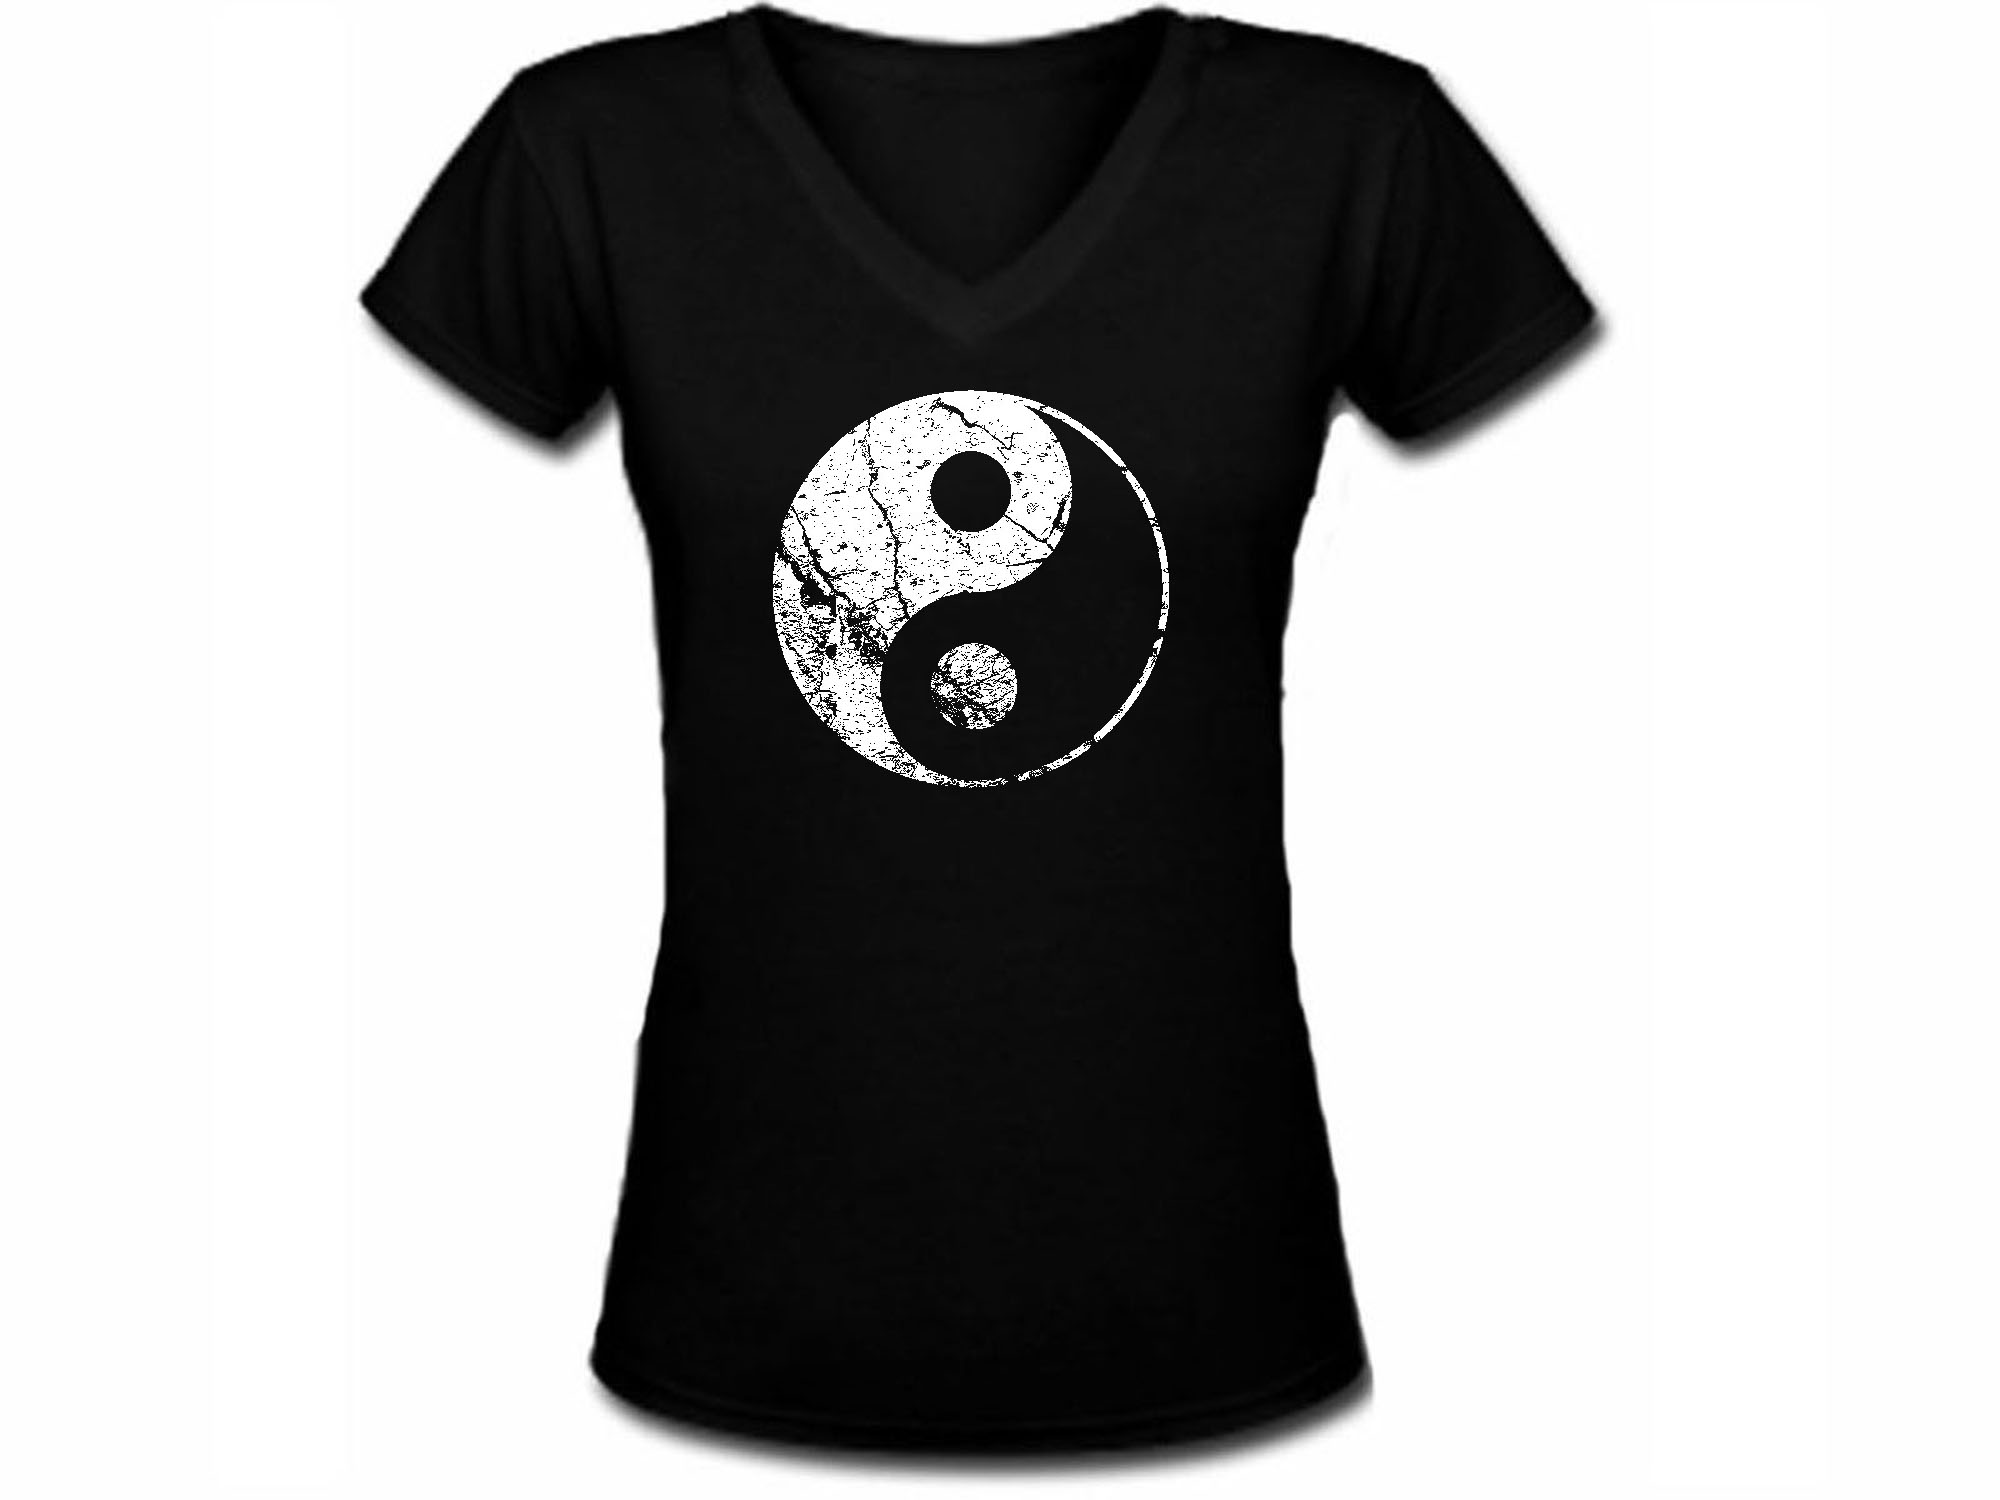 Yin yang distressed print black tee shirt